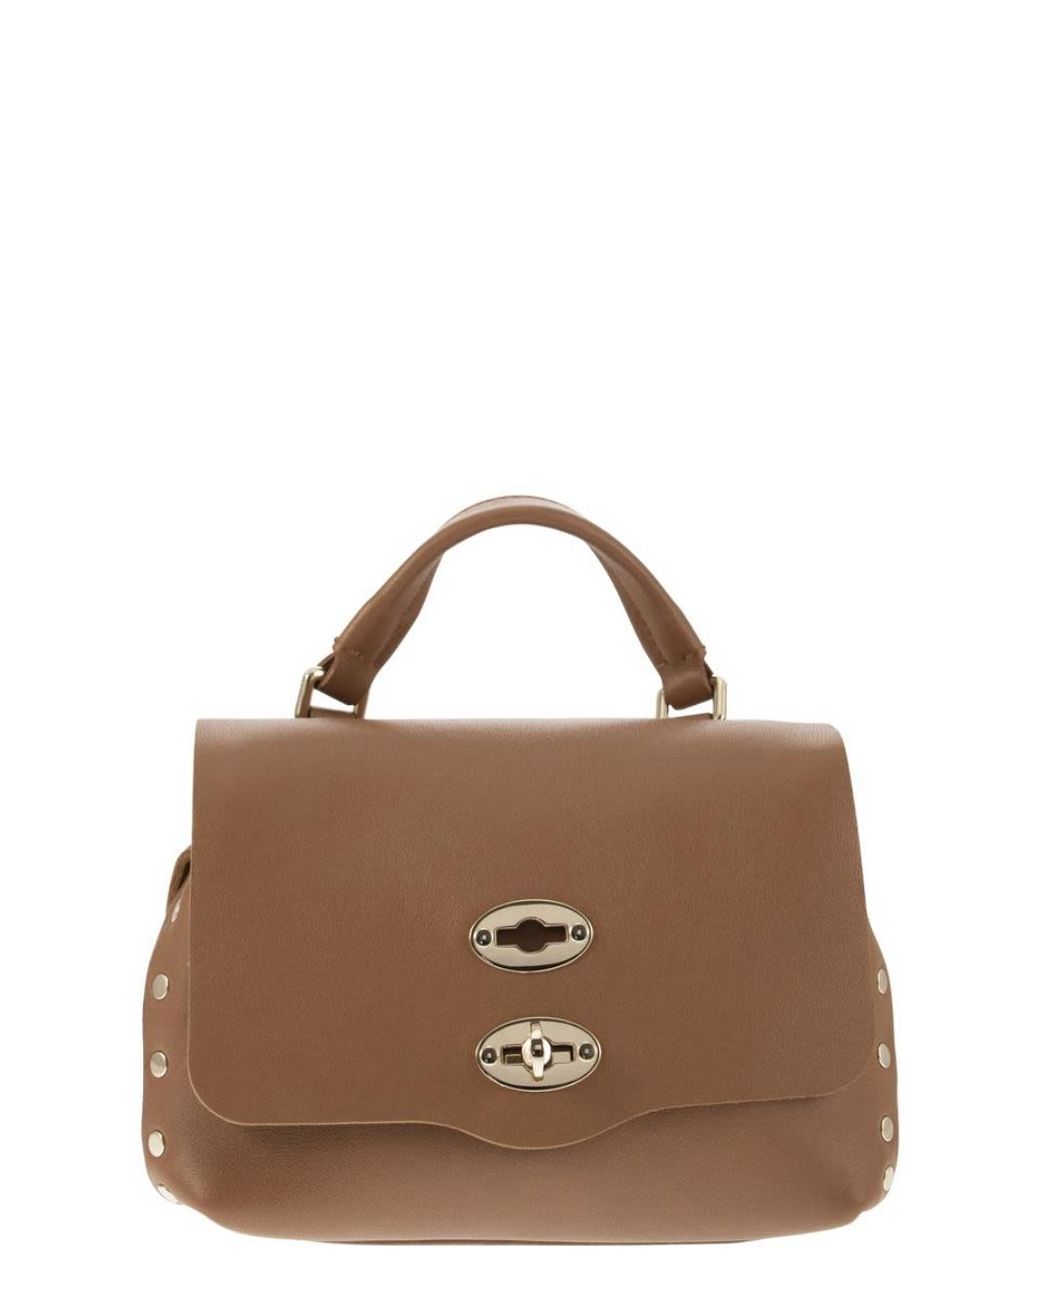 Zanellato Leather Handbag in Brown | Lyst